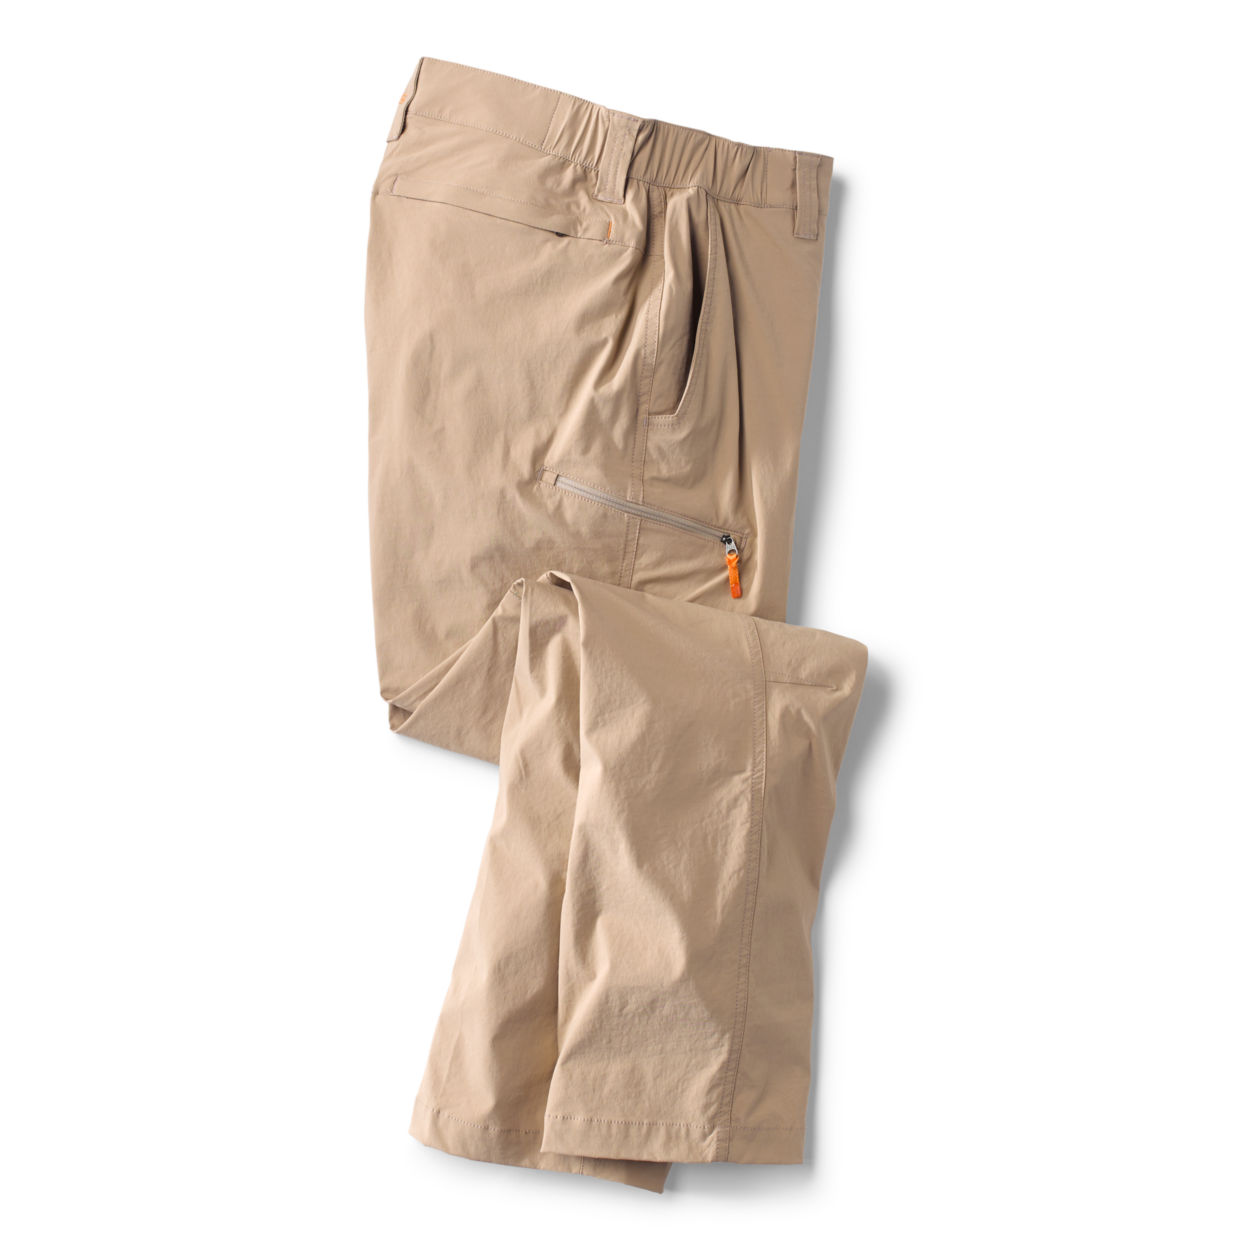 Jackson Quick-Dry Pants